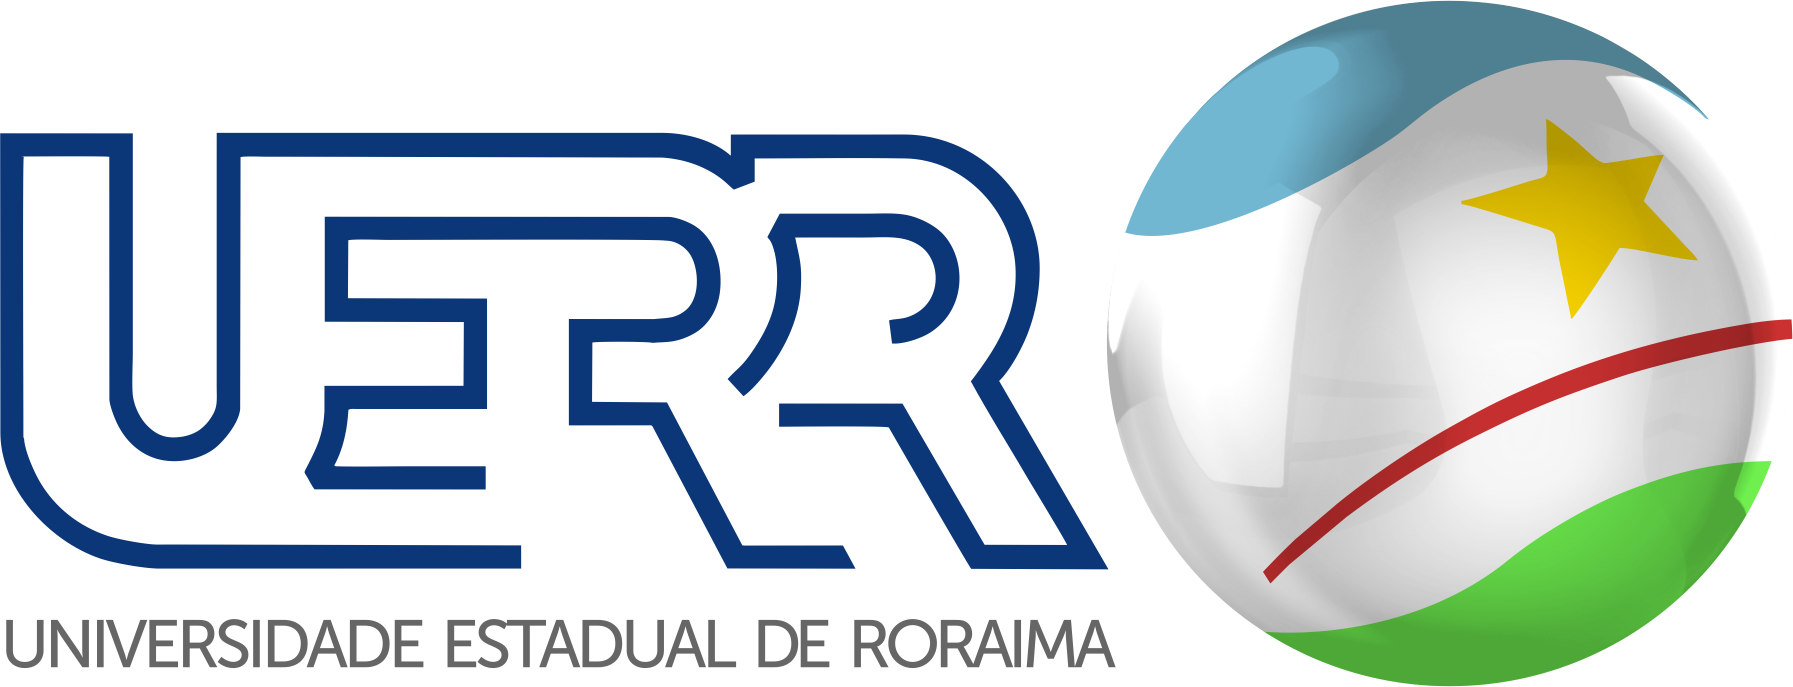 Downloads - UERR - Universidade Estadual de Roraima